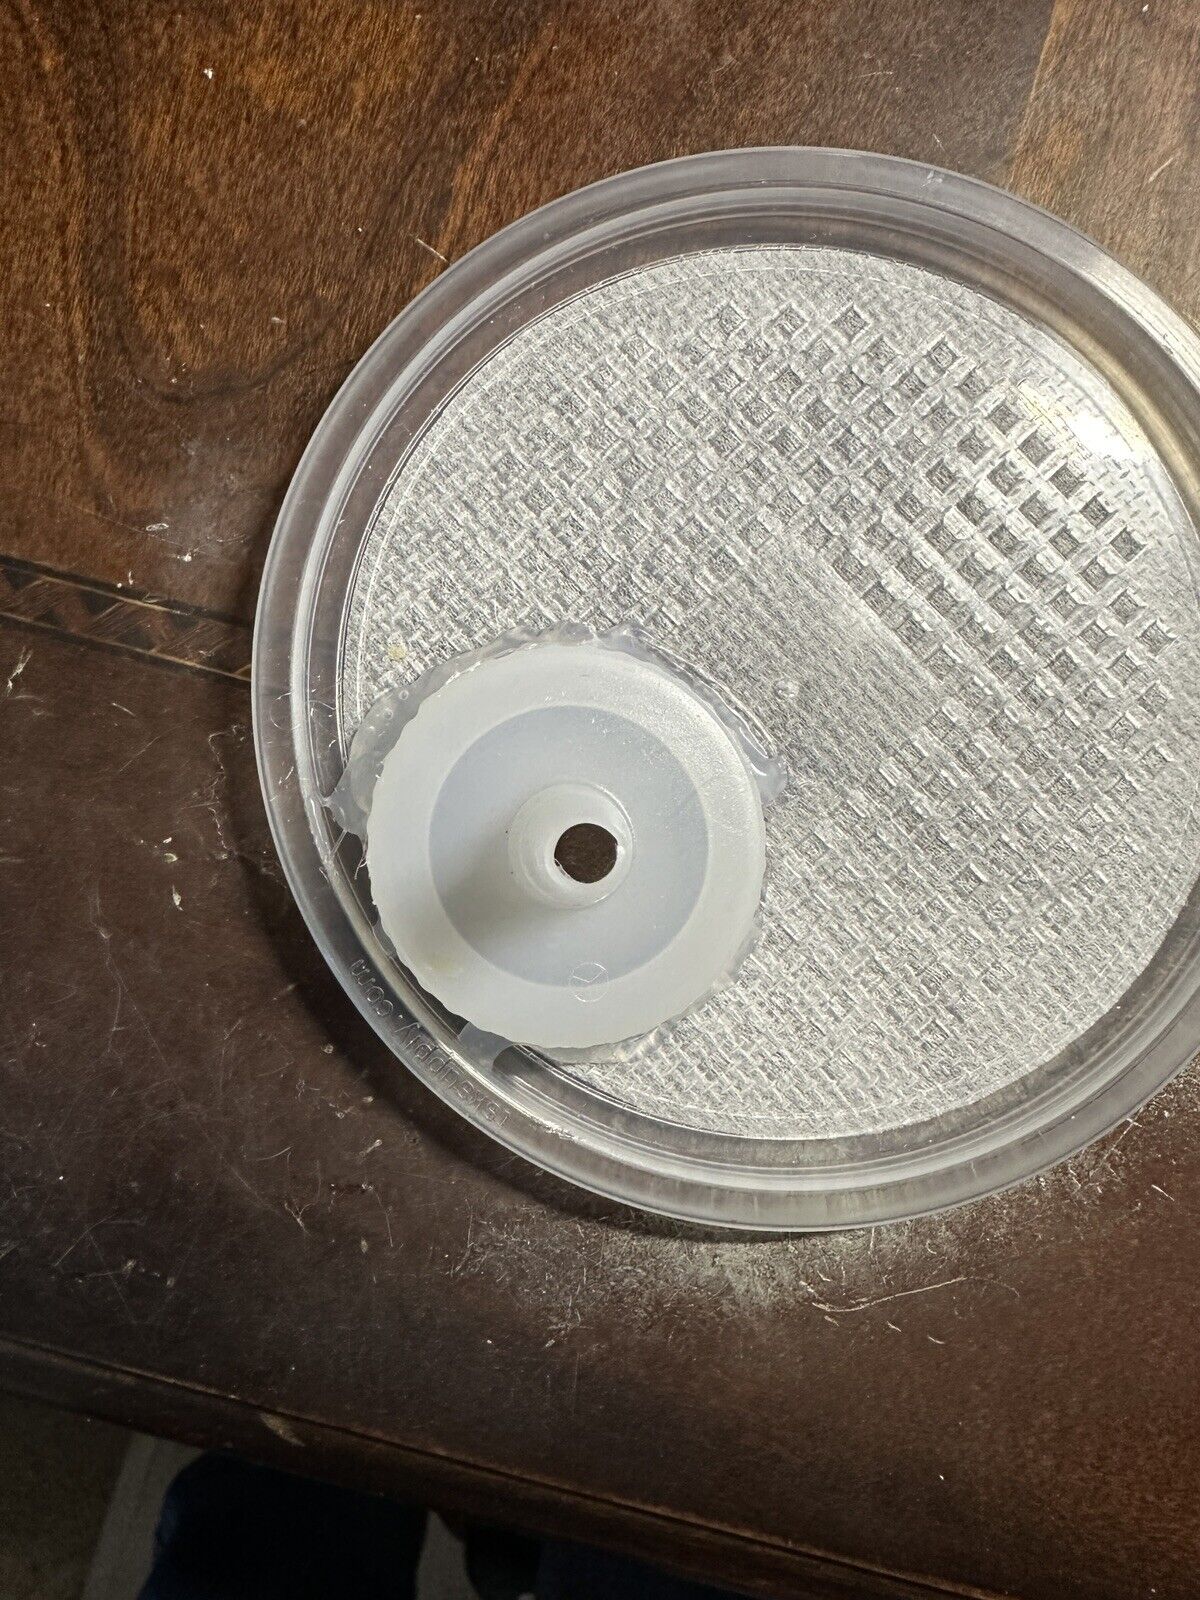 Fruit Fly Dispenser Caps - Easier target feeding and controllable dispensing